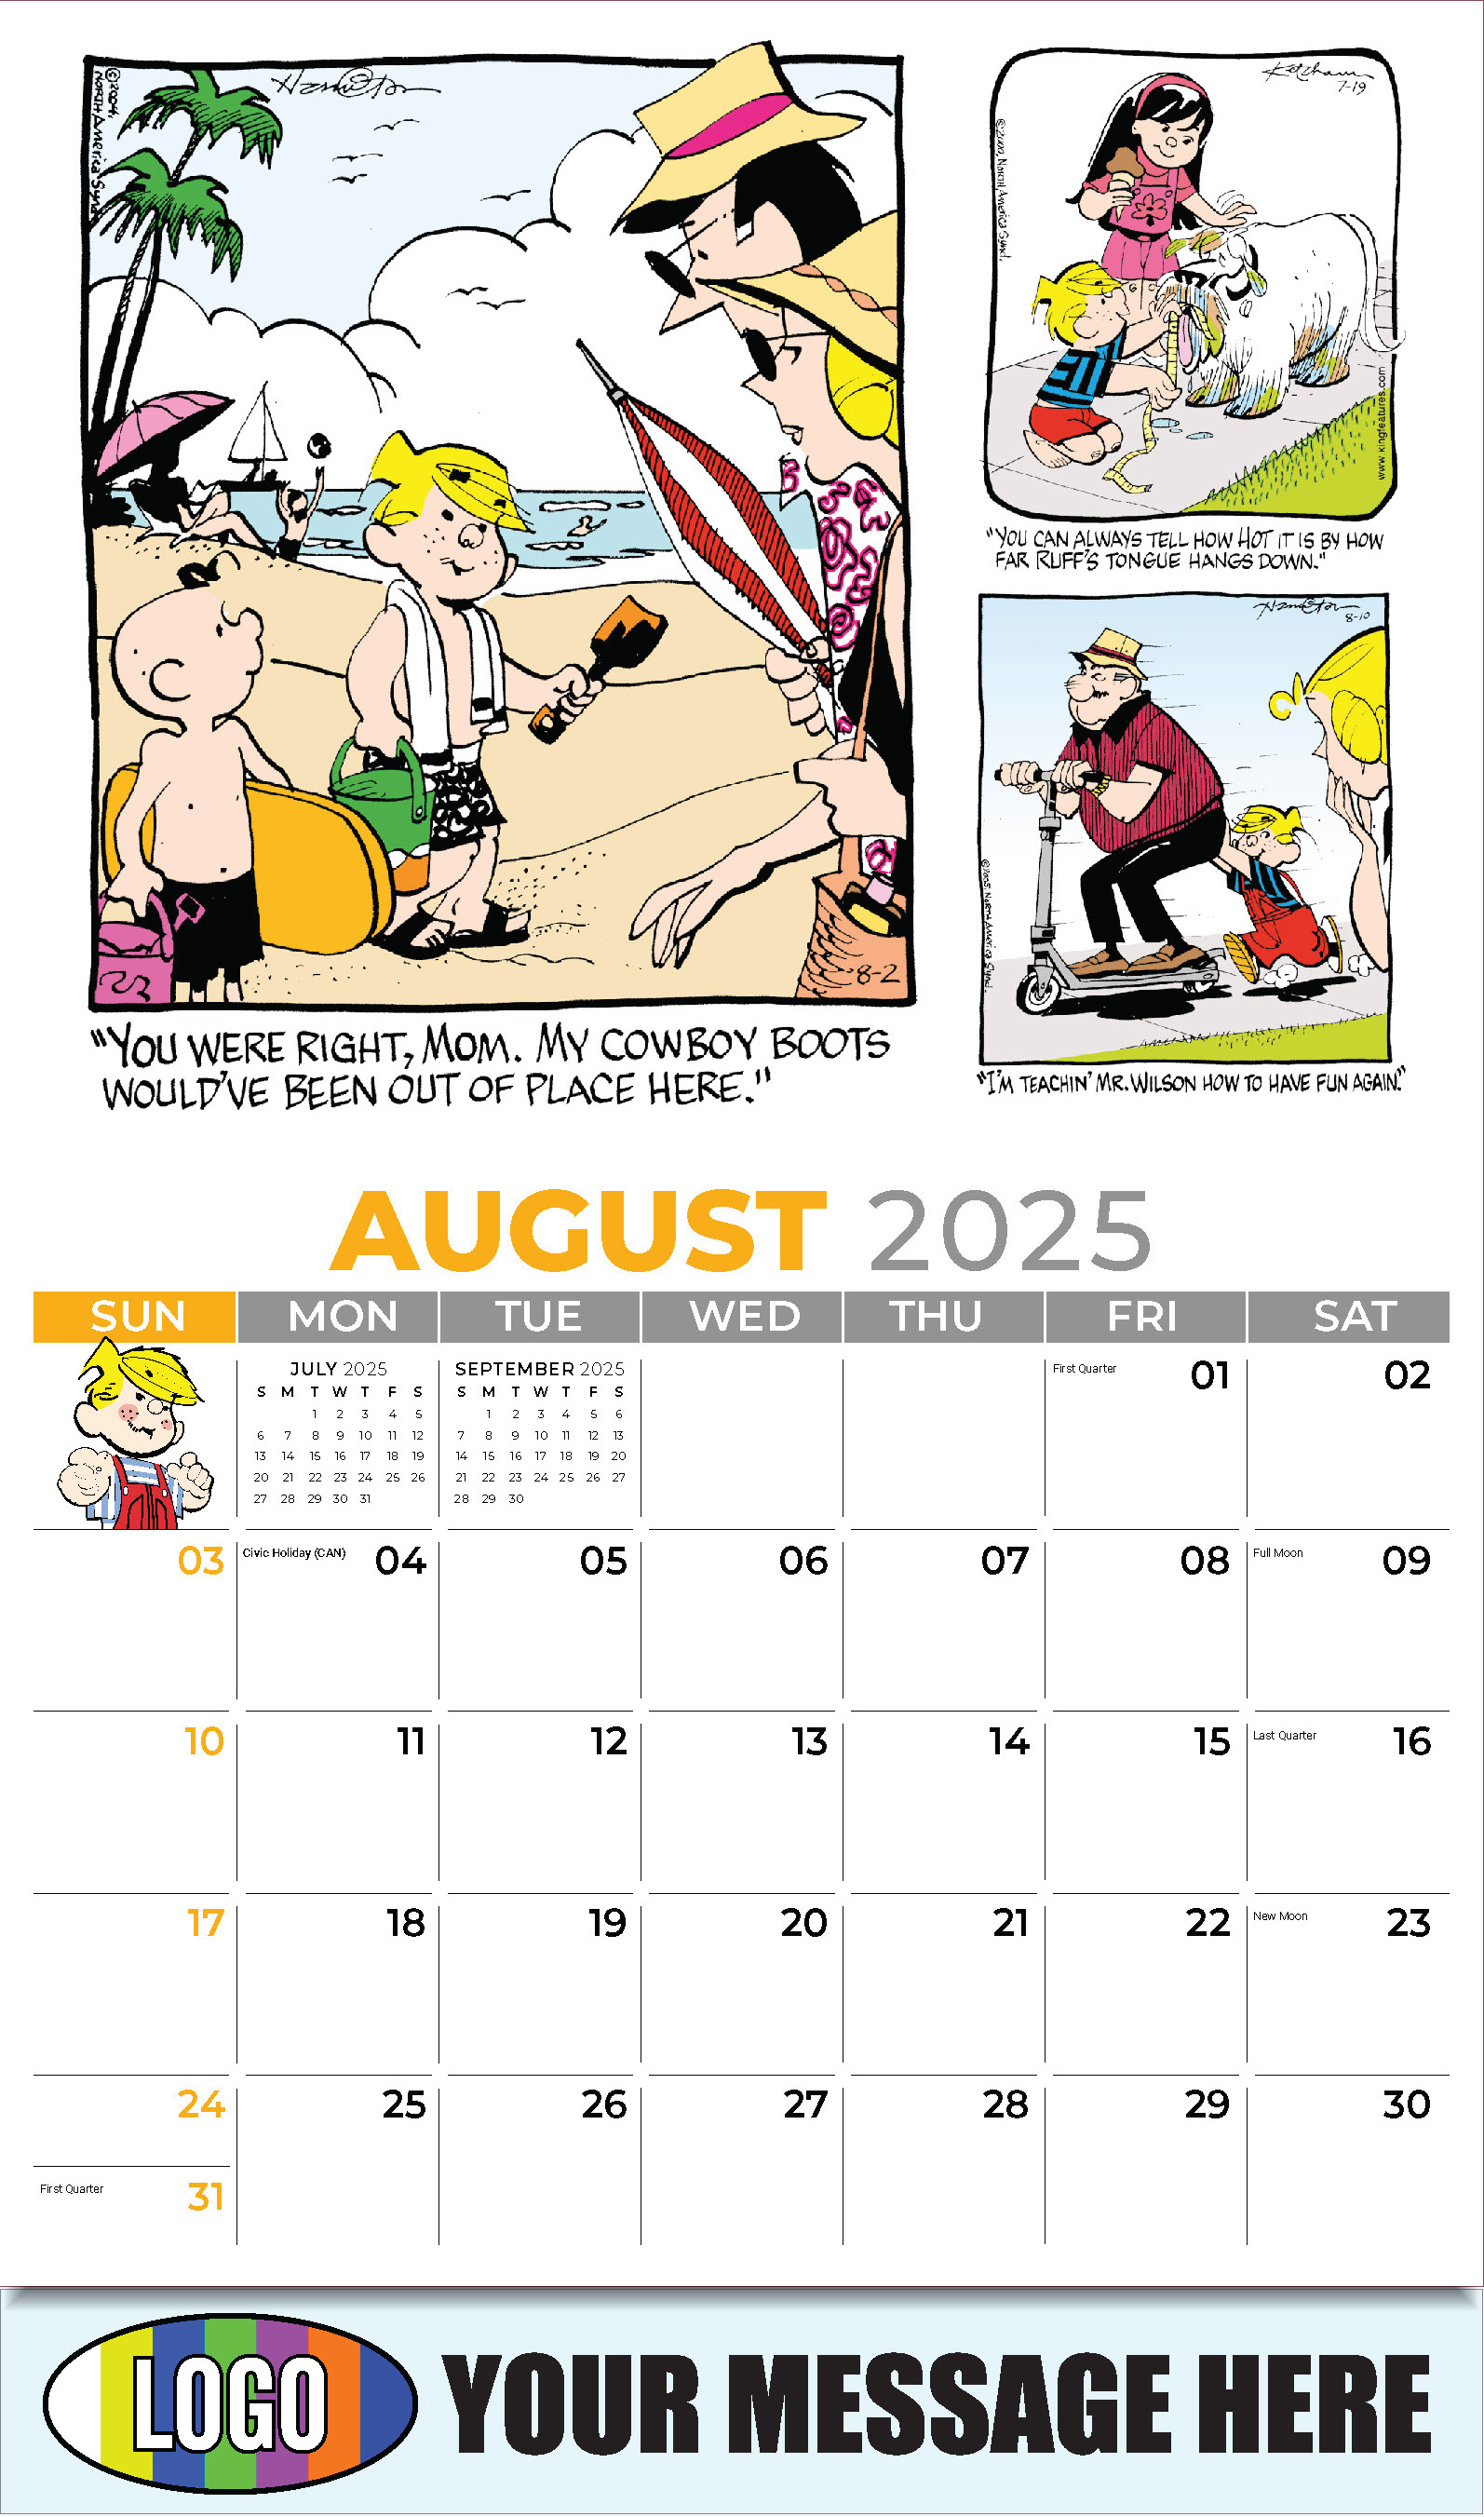 Dennis the Menace 2025 Business Promotional Wall Calendar - August